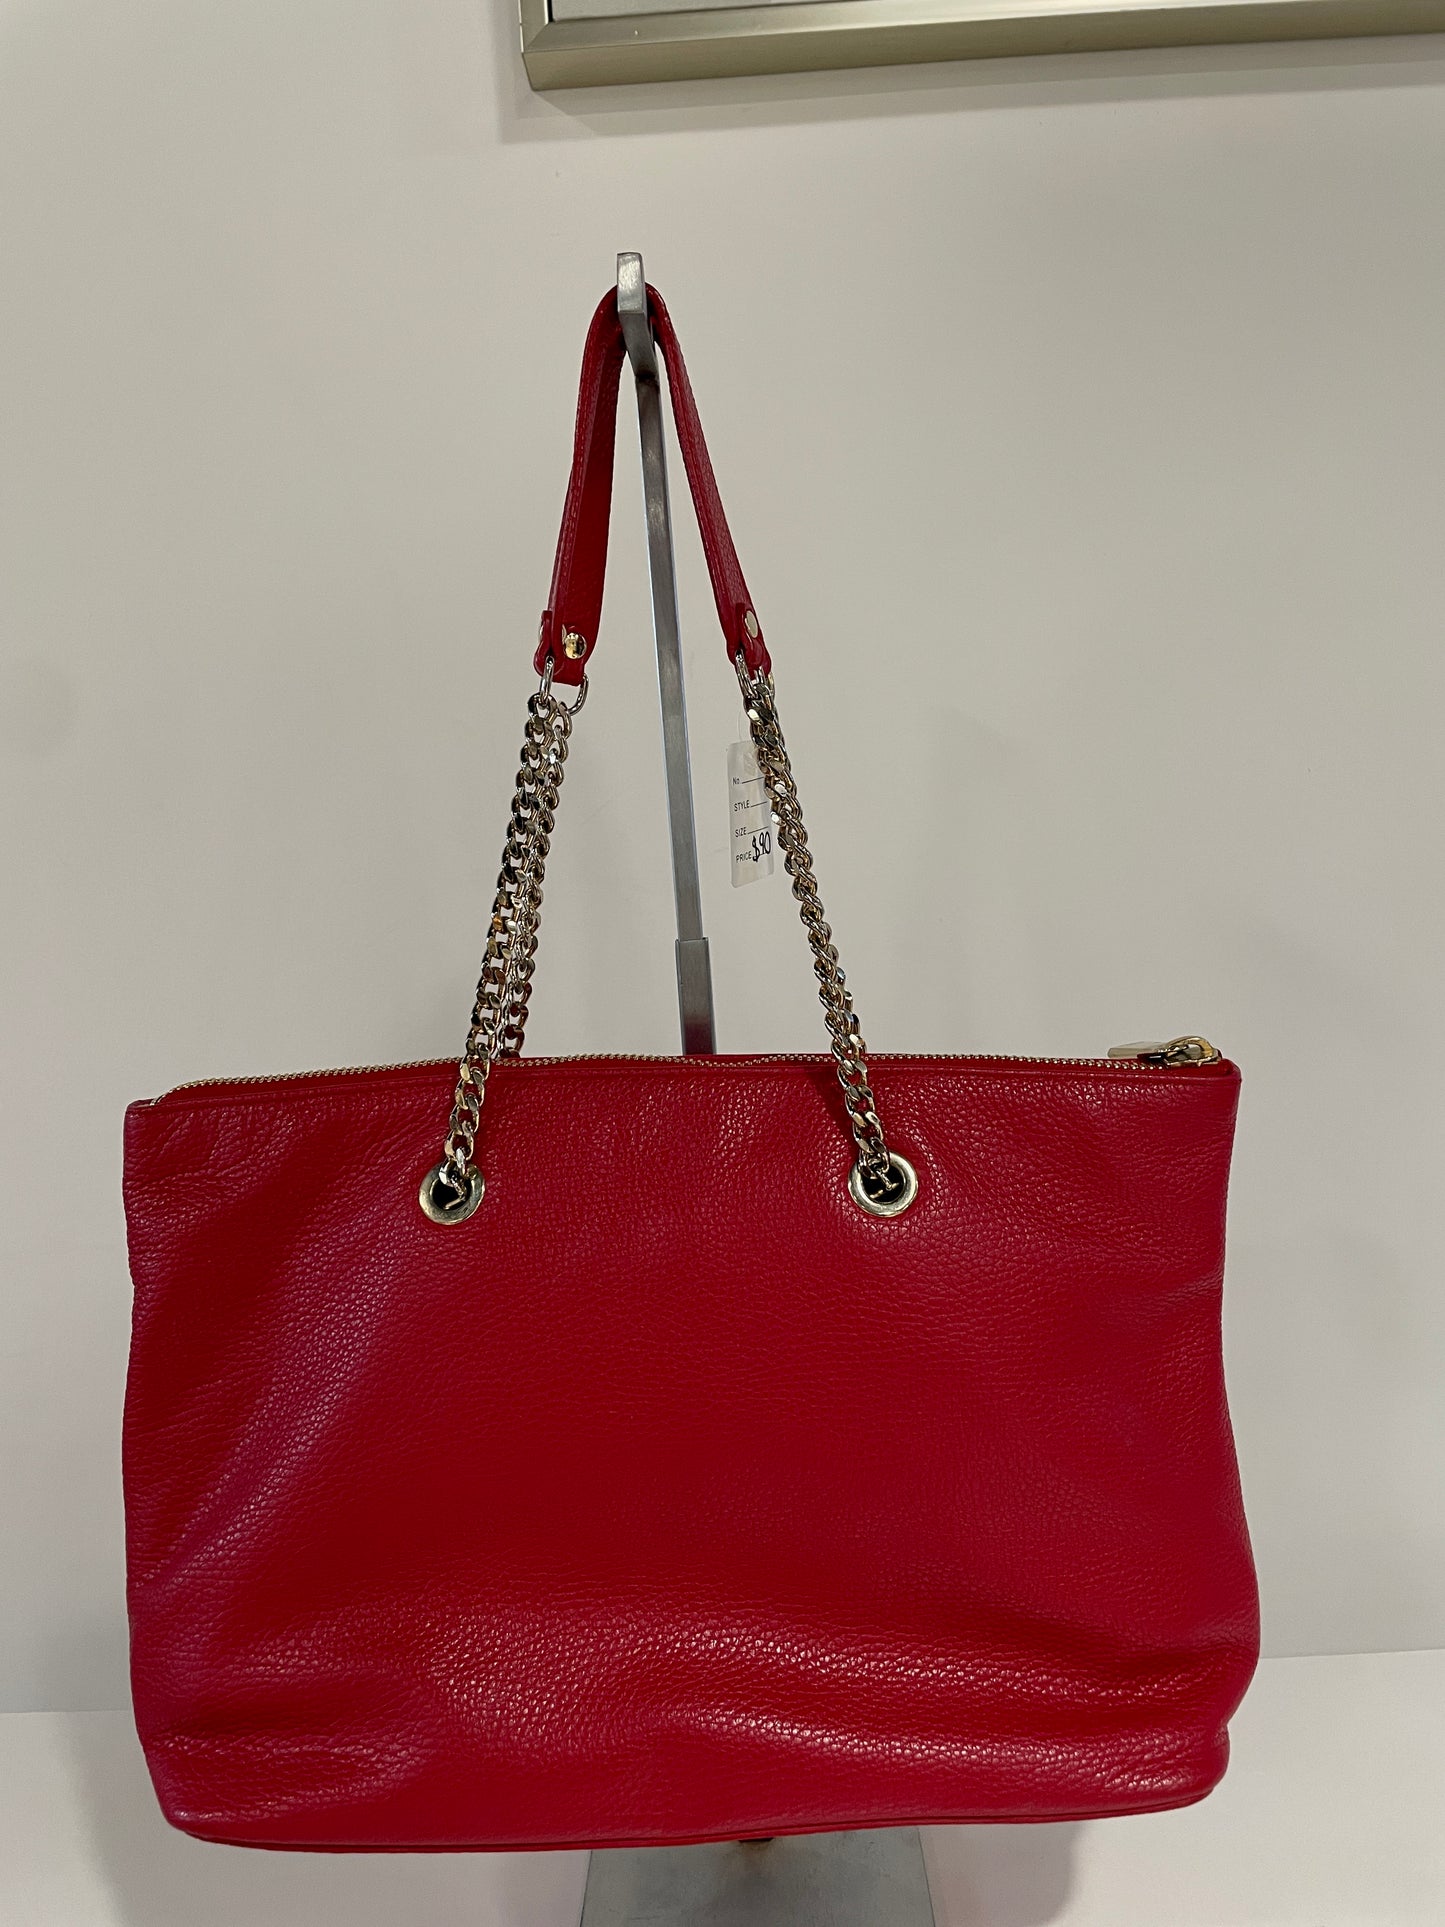 Red chain linked leather shoulder bag